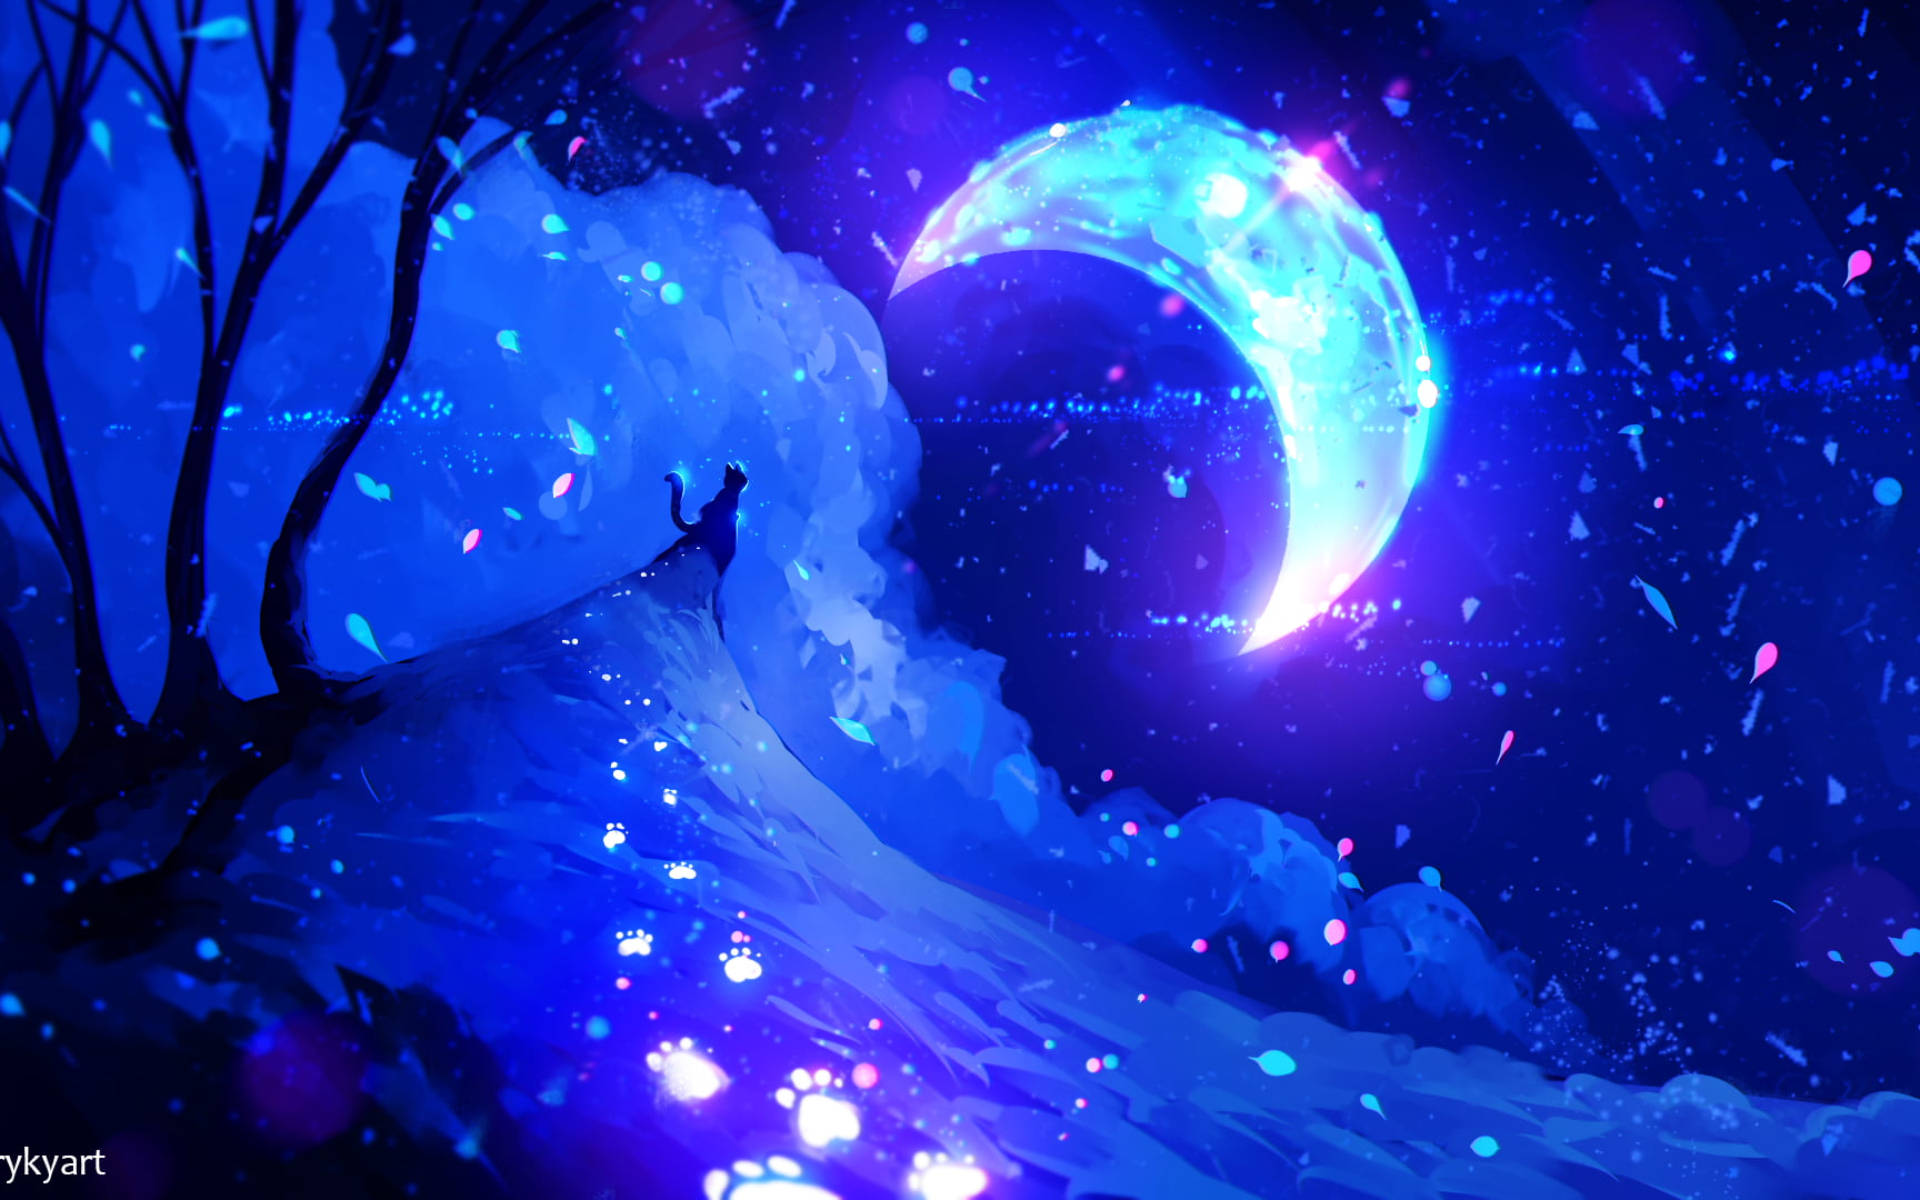 Galaxy Moon And Cat Fantasy Artwork wallpaper